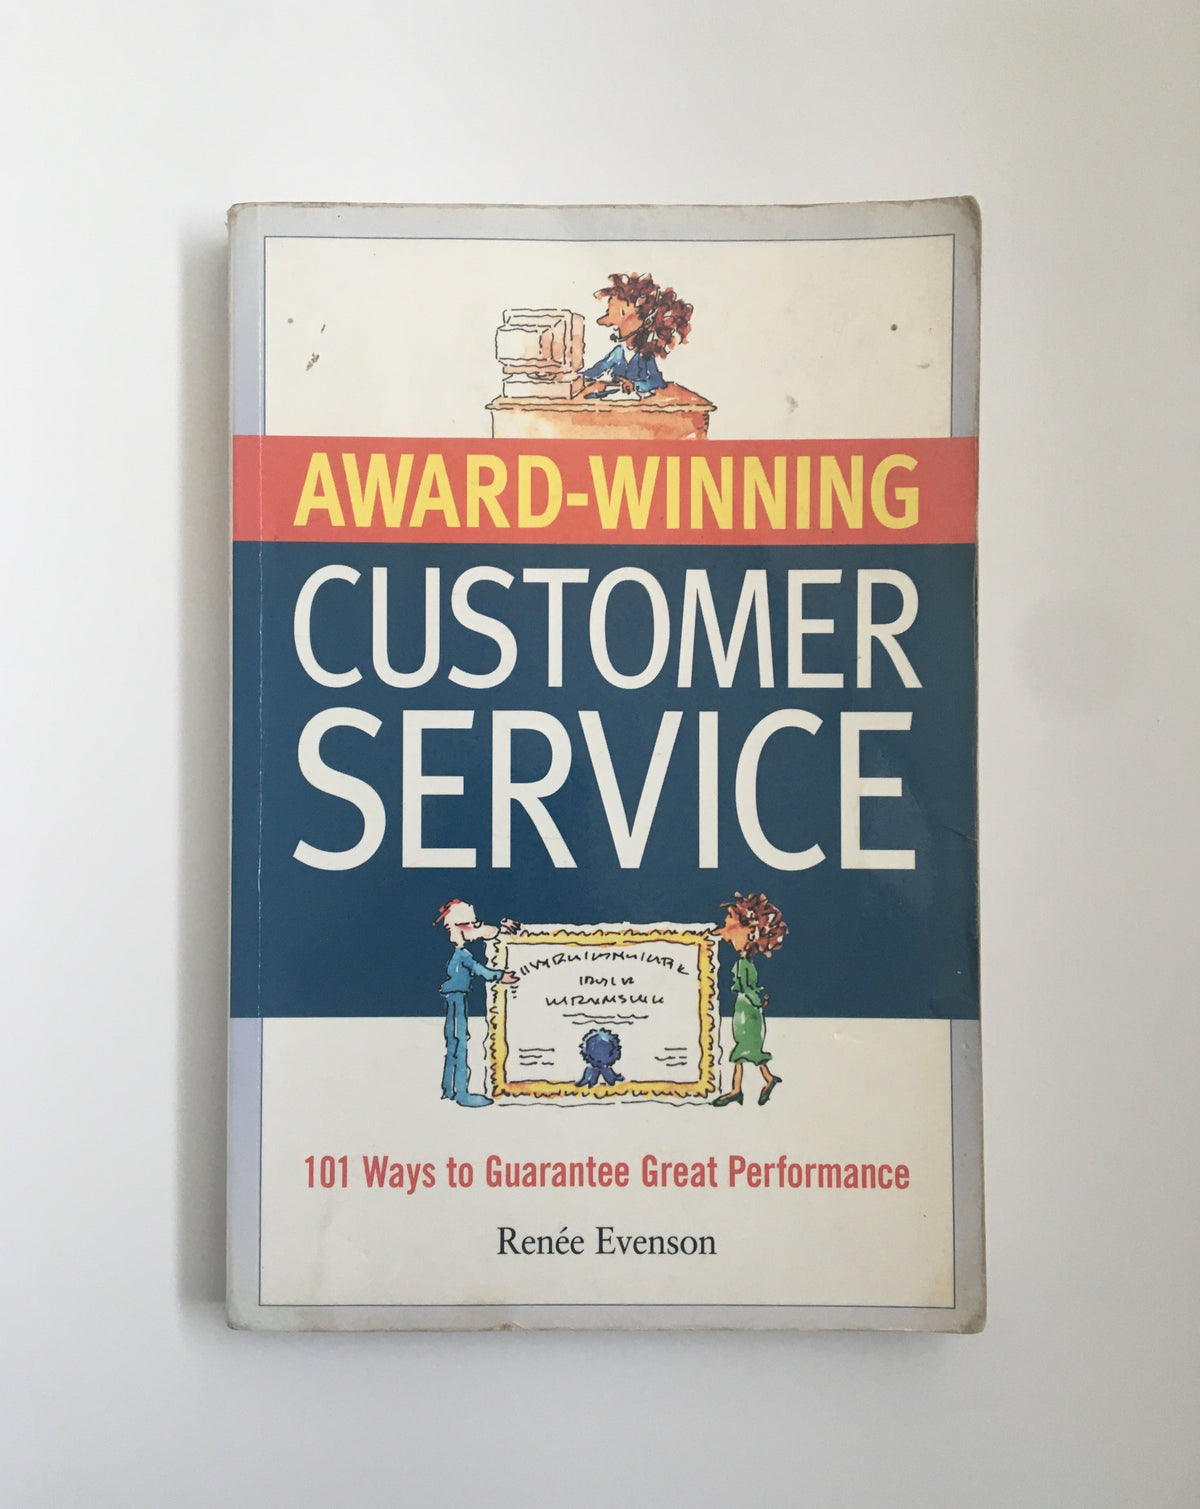 Award-Winning Customer Service by Renee Evenson